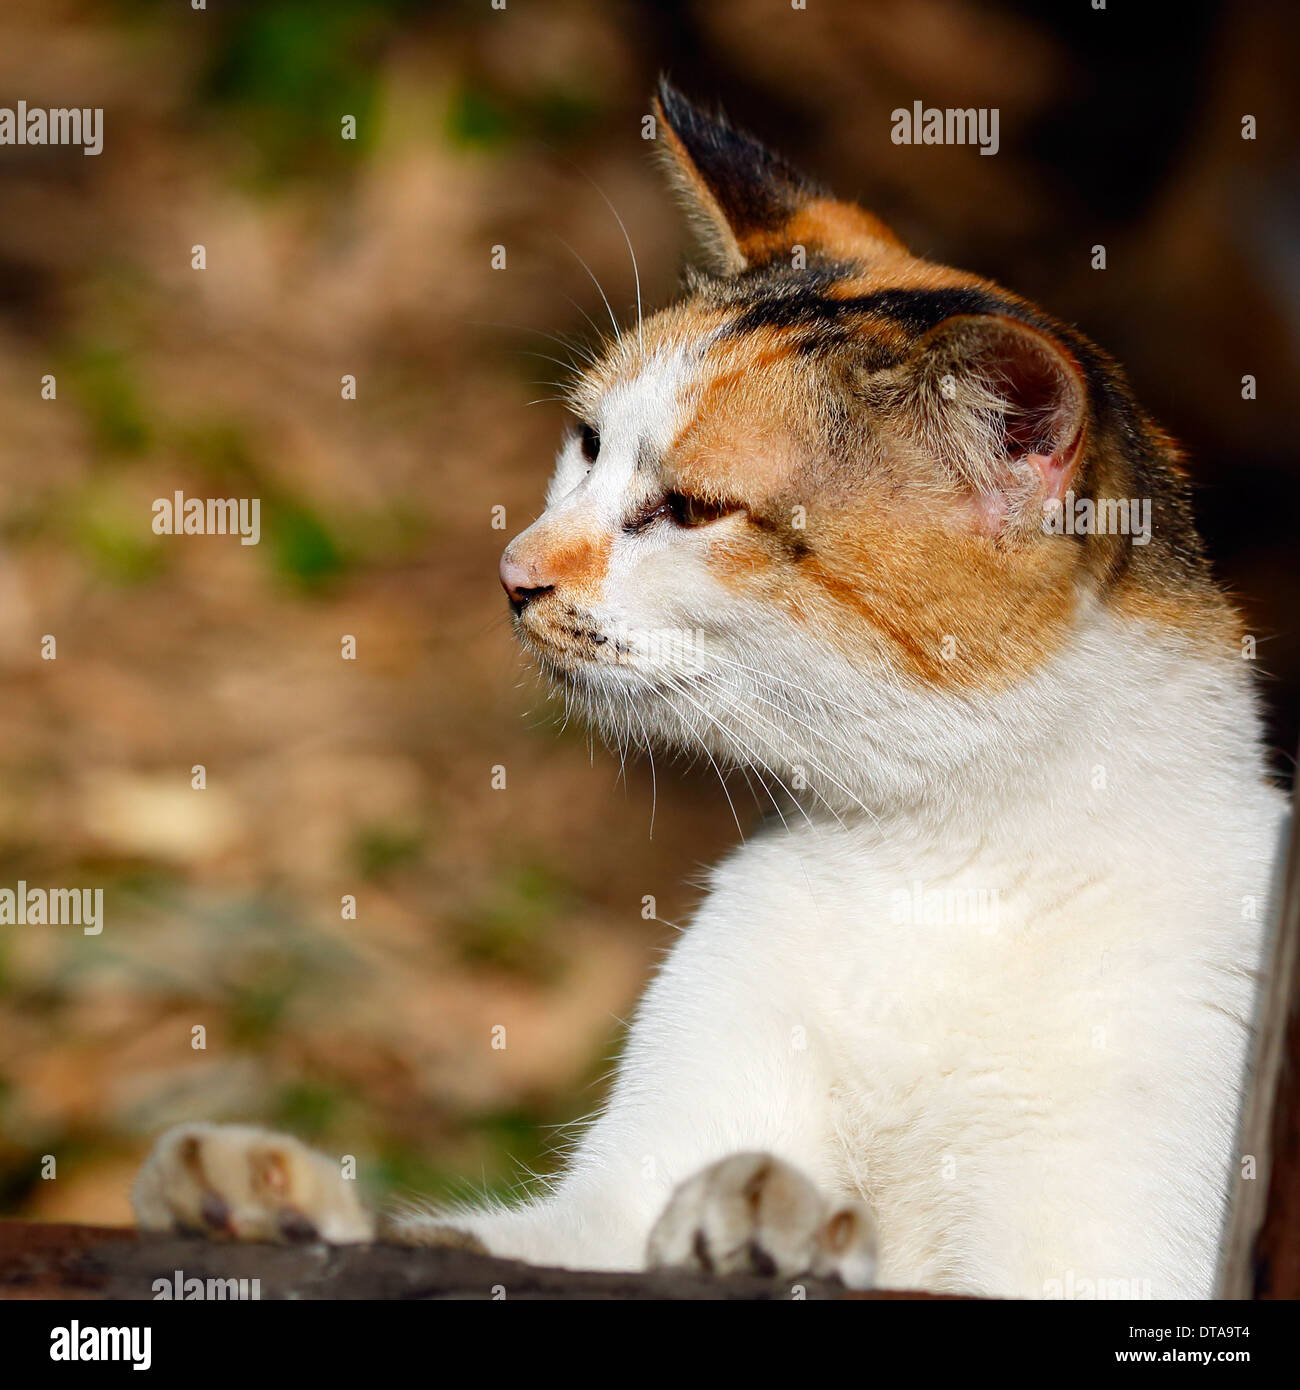 Closeup view of a cute cat face Stock Photo